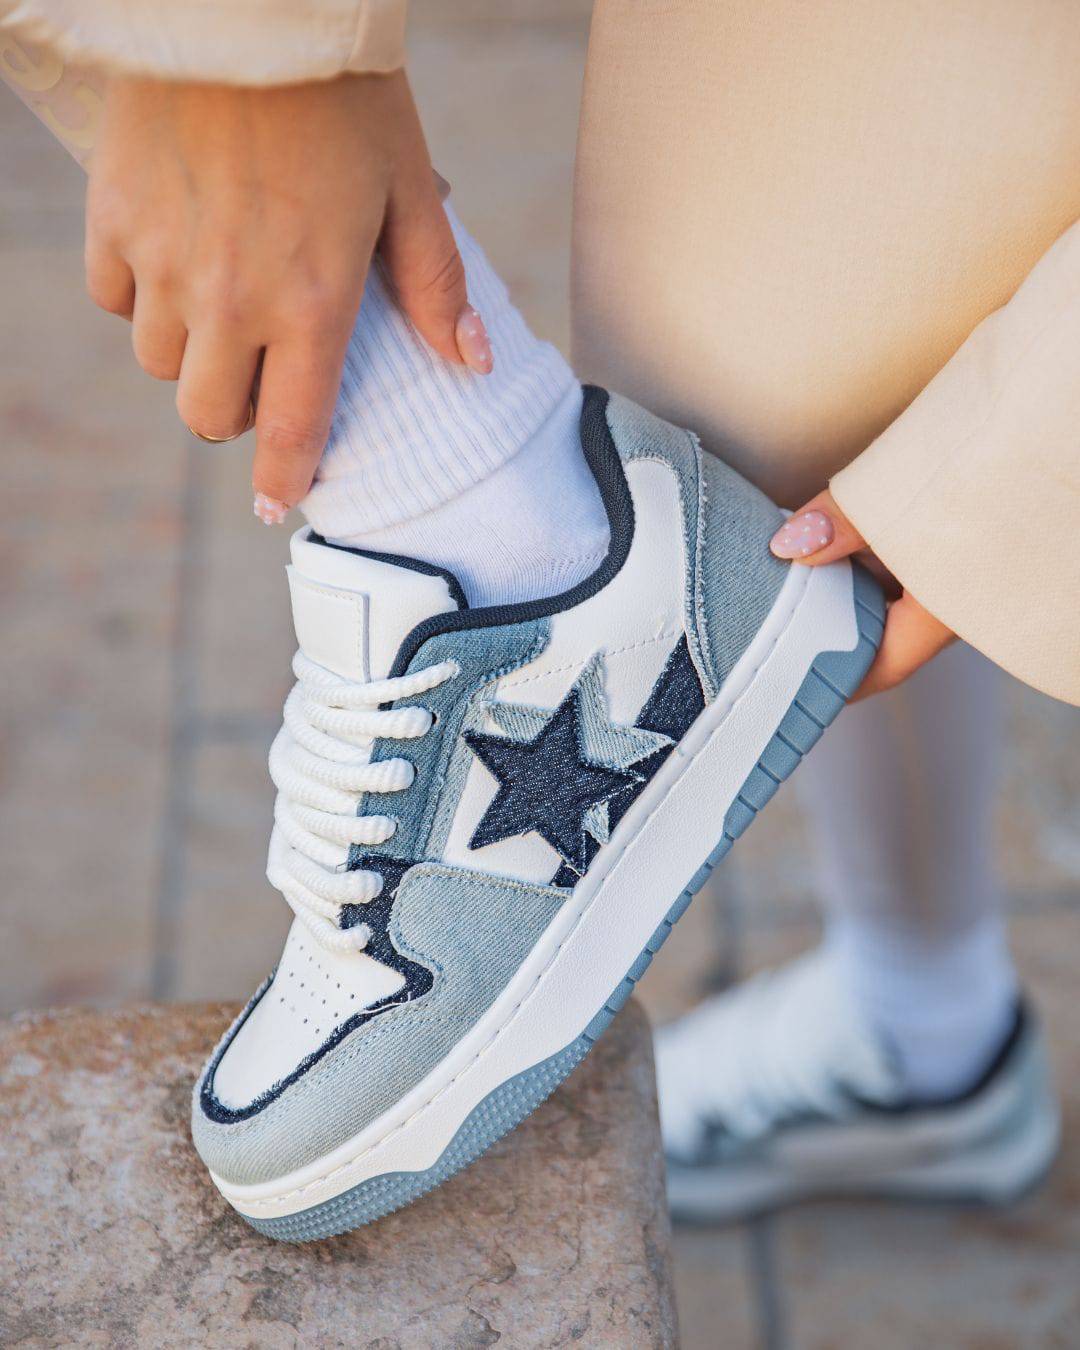 Damen-Sneaker aus Jeansstoff mit Stern und Plateausohle in Blau - Coralia - Casualmode.de